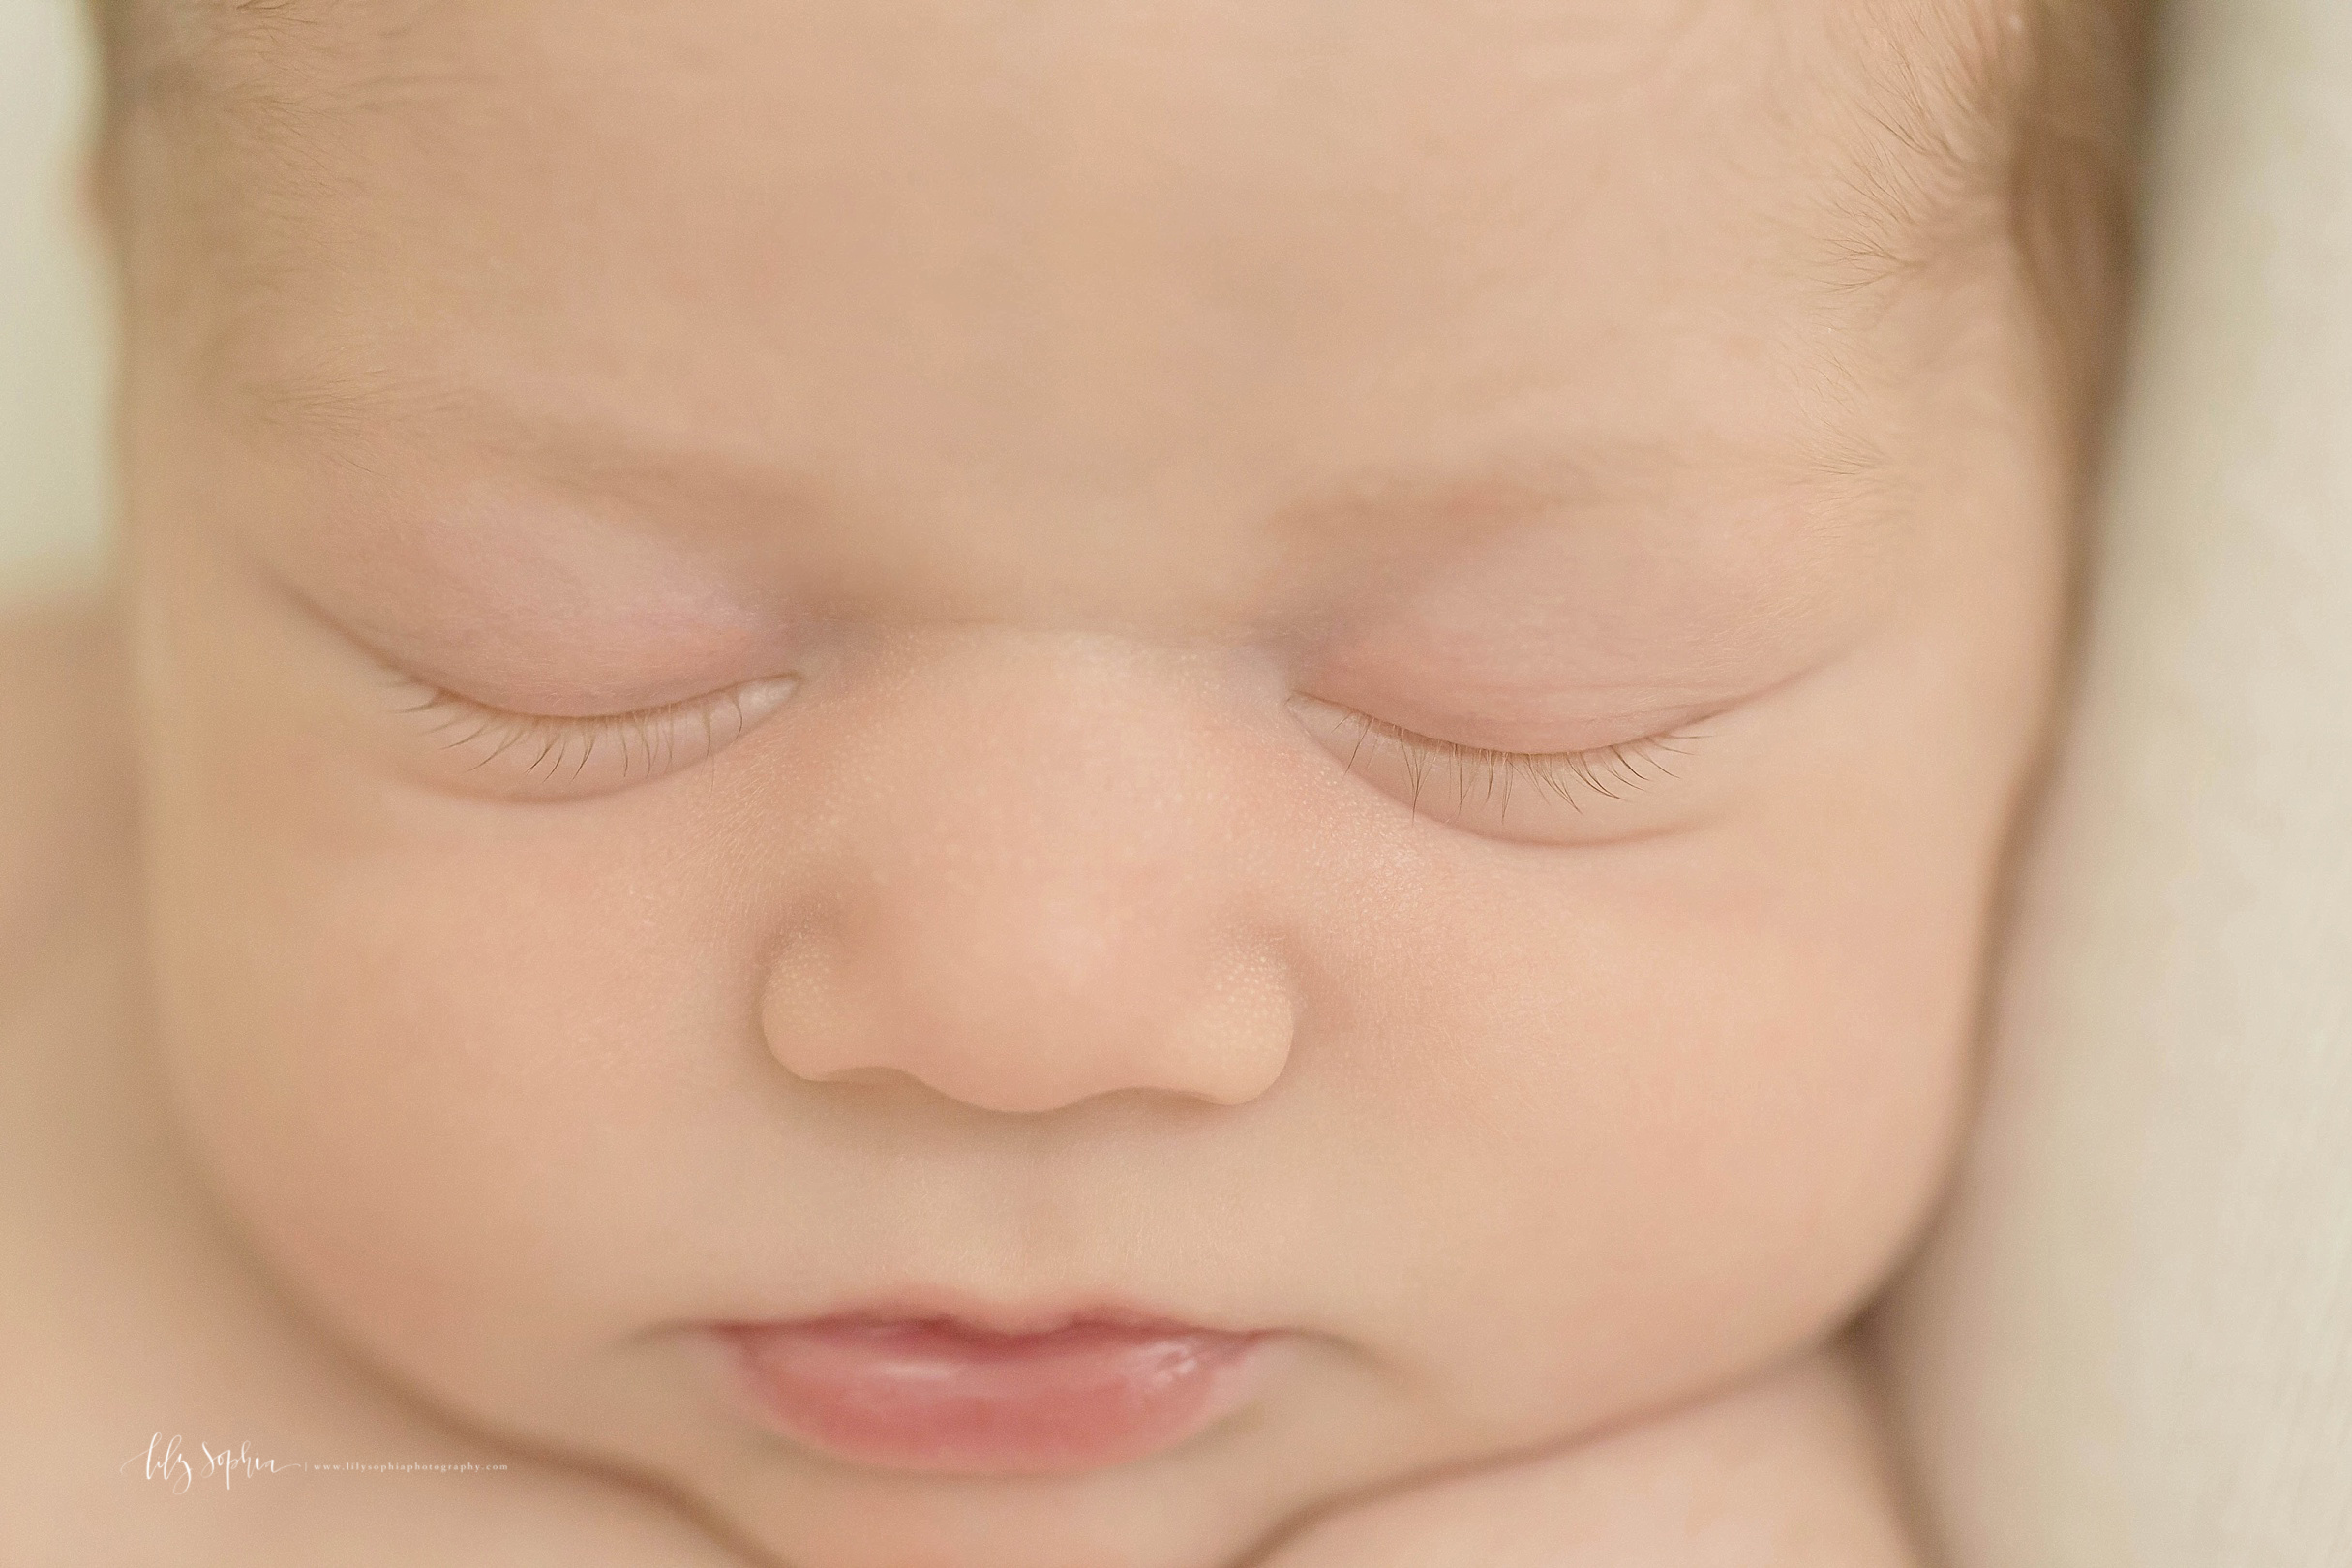  Up close image of a sleeping, newborn,&nbsp;baby's face.&nbsp; 